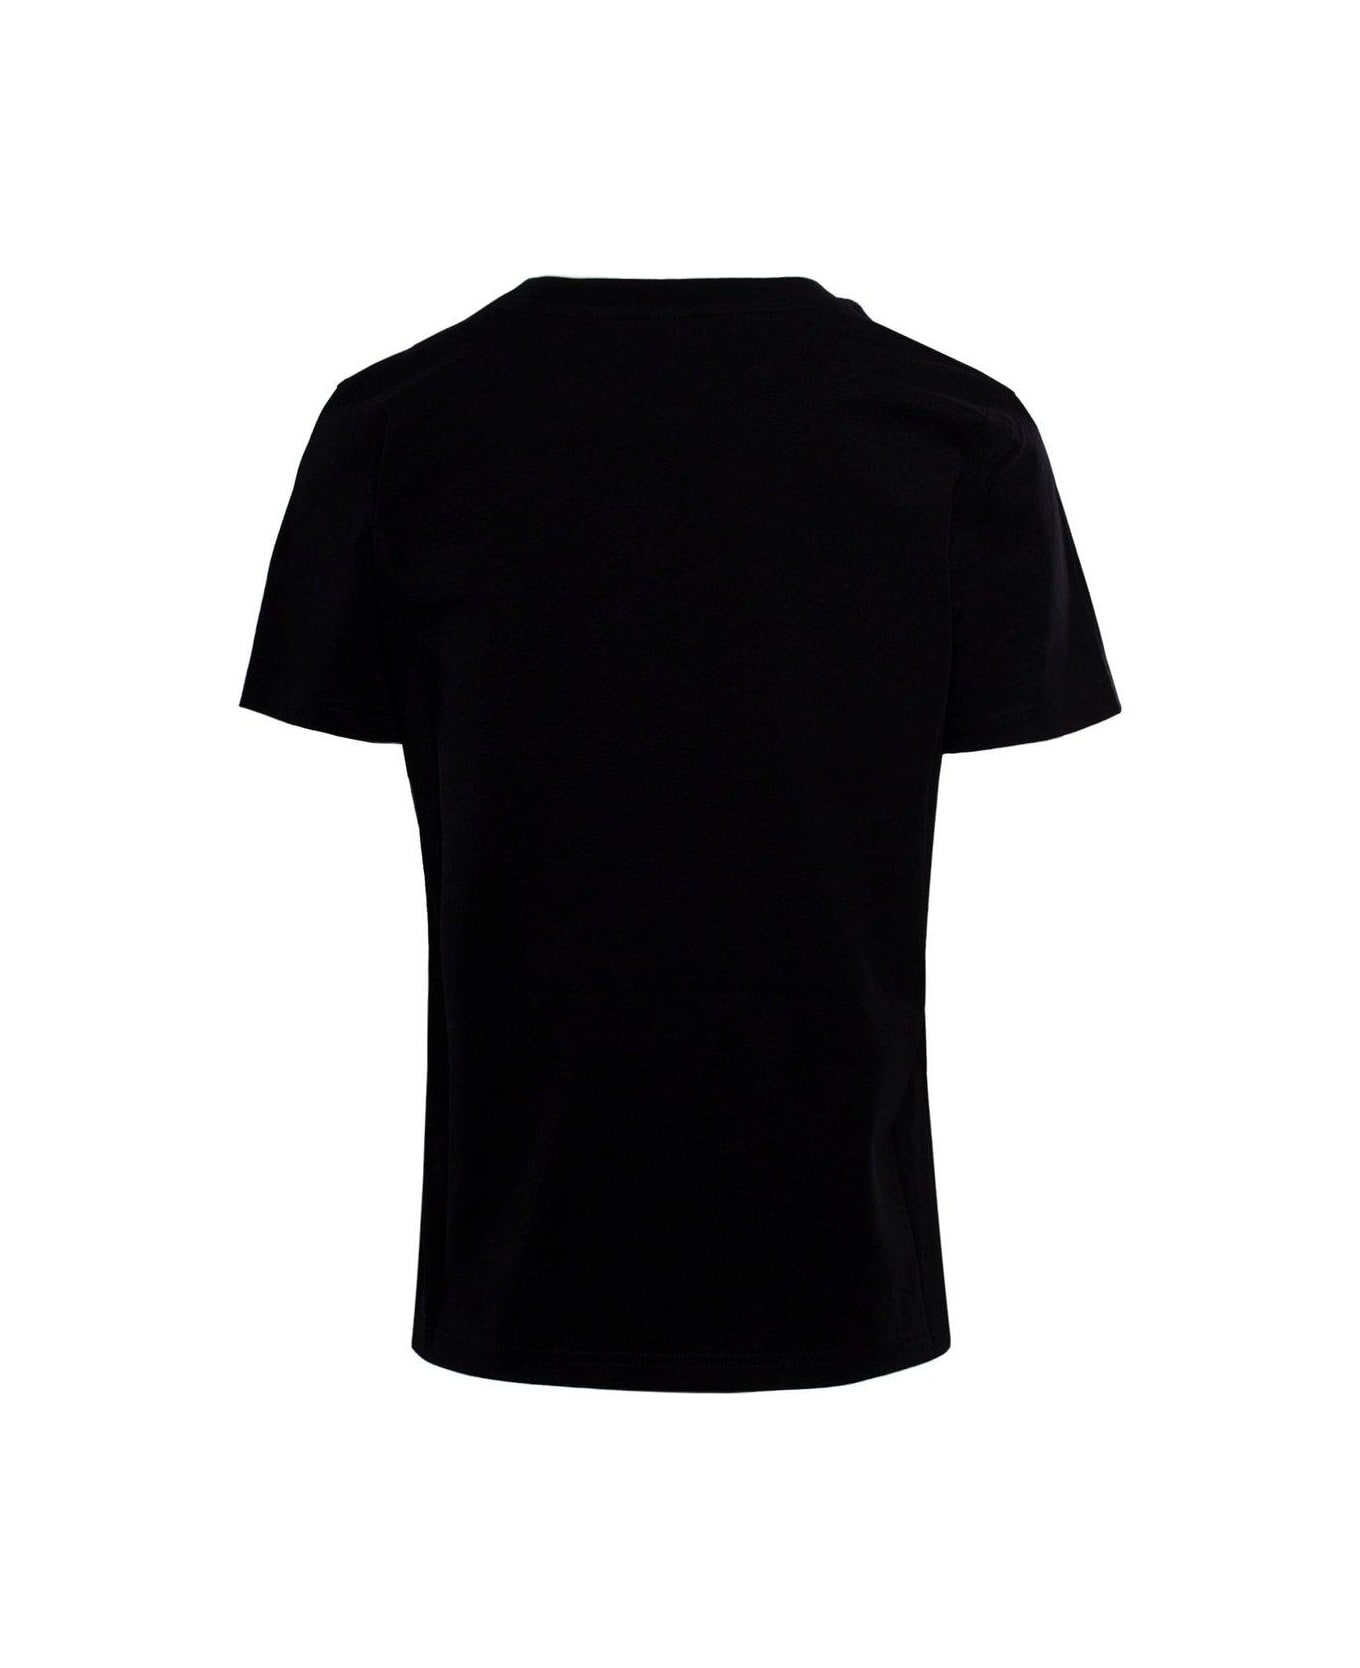 Moschino Logo Printed Crewneck T-shirt - BLACK